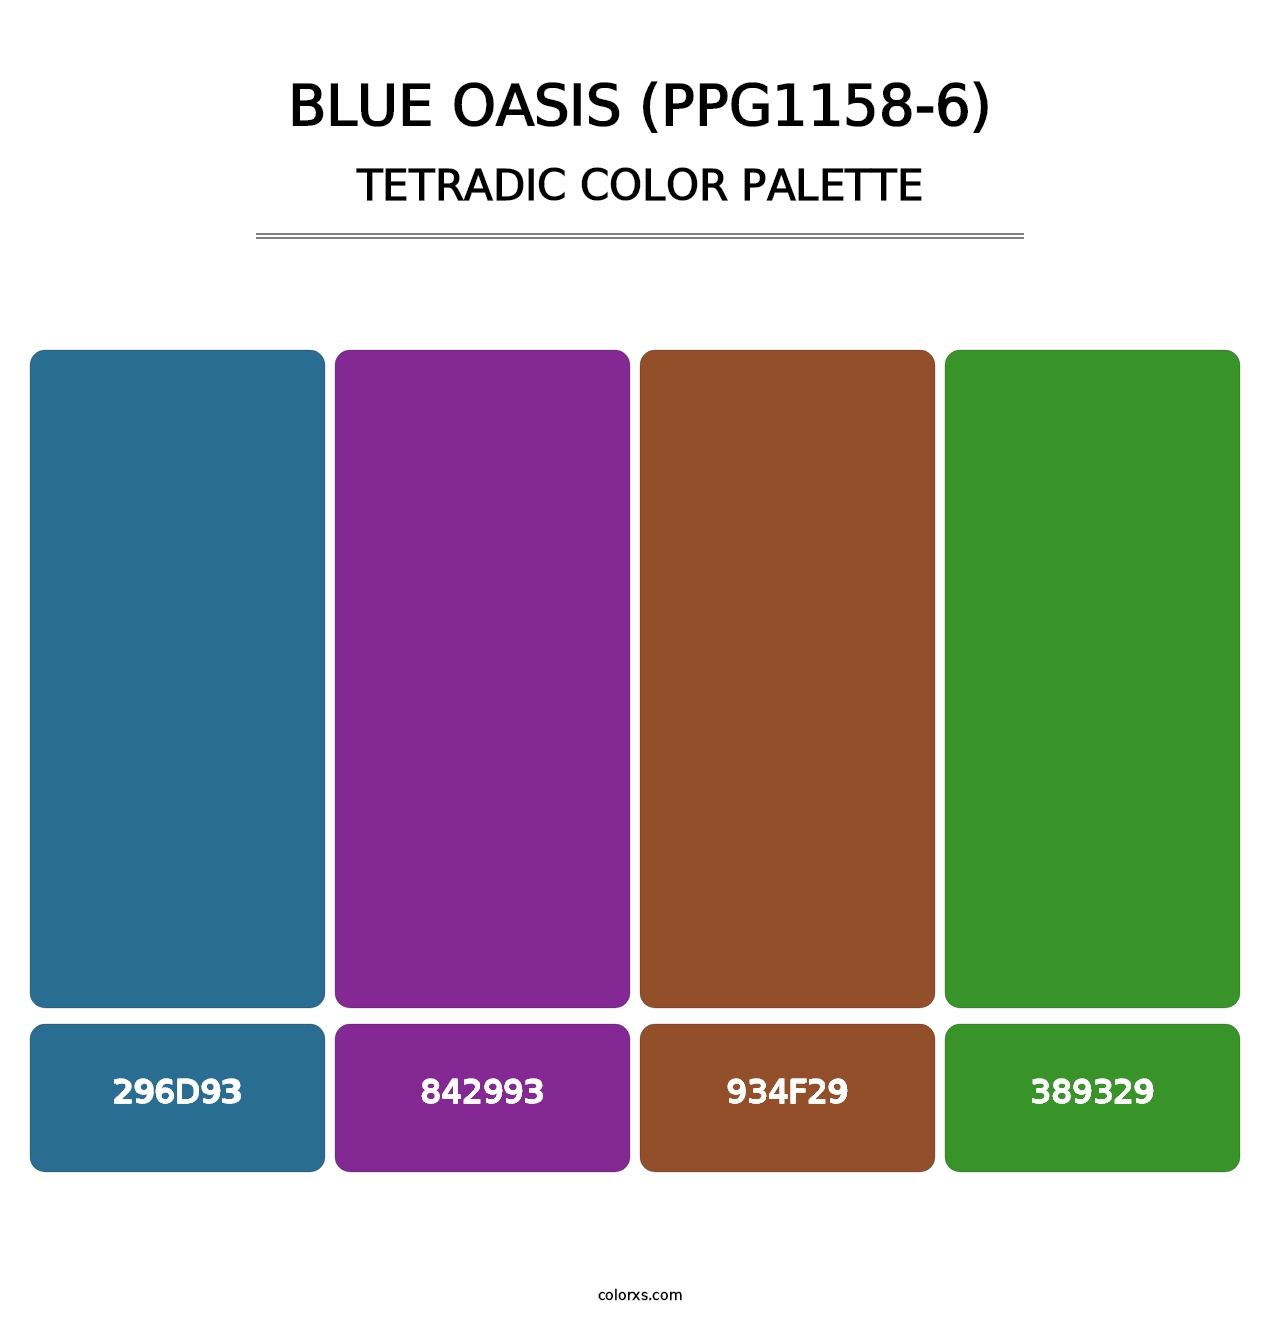 Blue Oasis (PPG1158-6) - Tetradic Color Palette